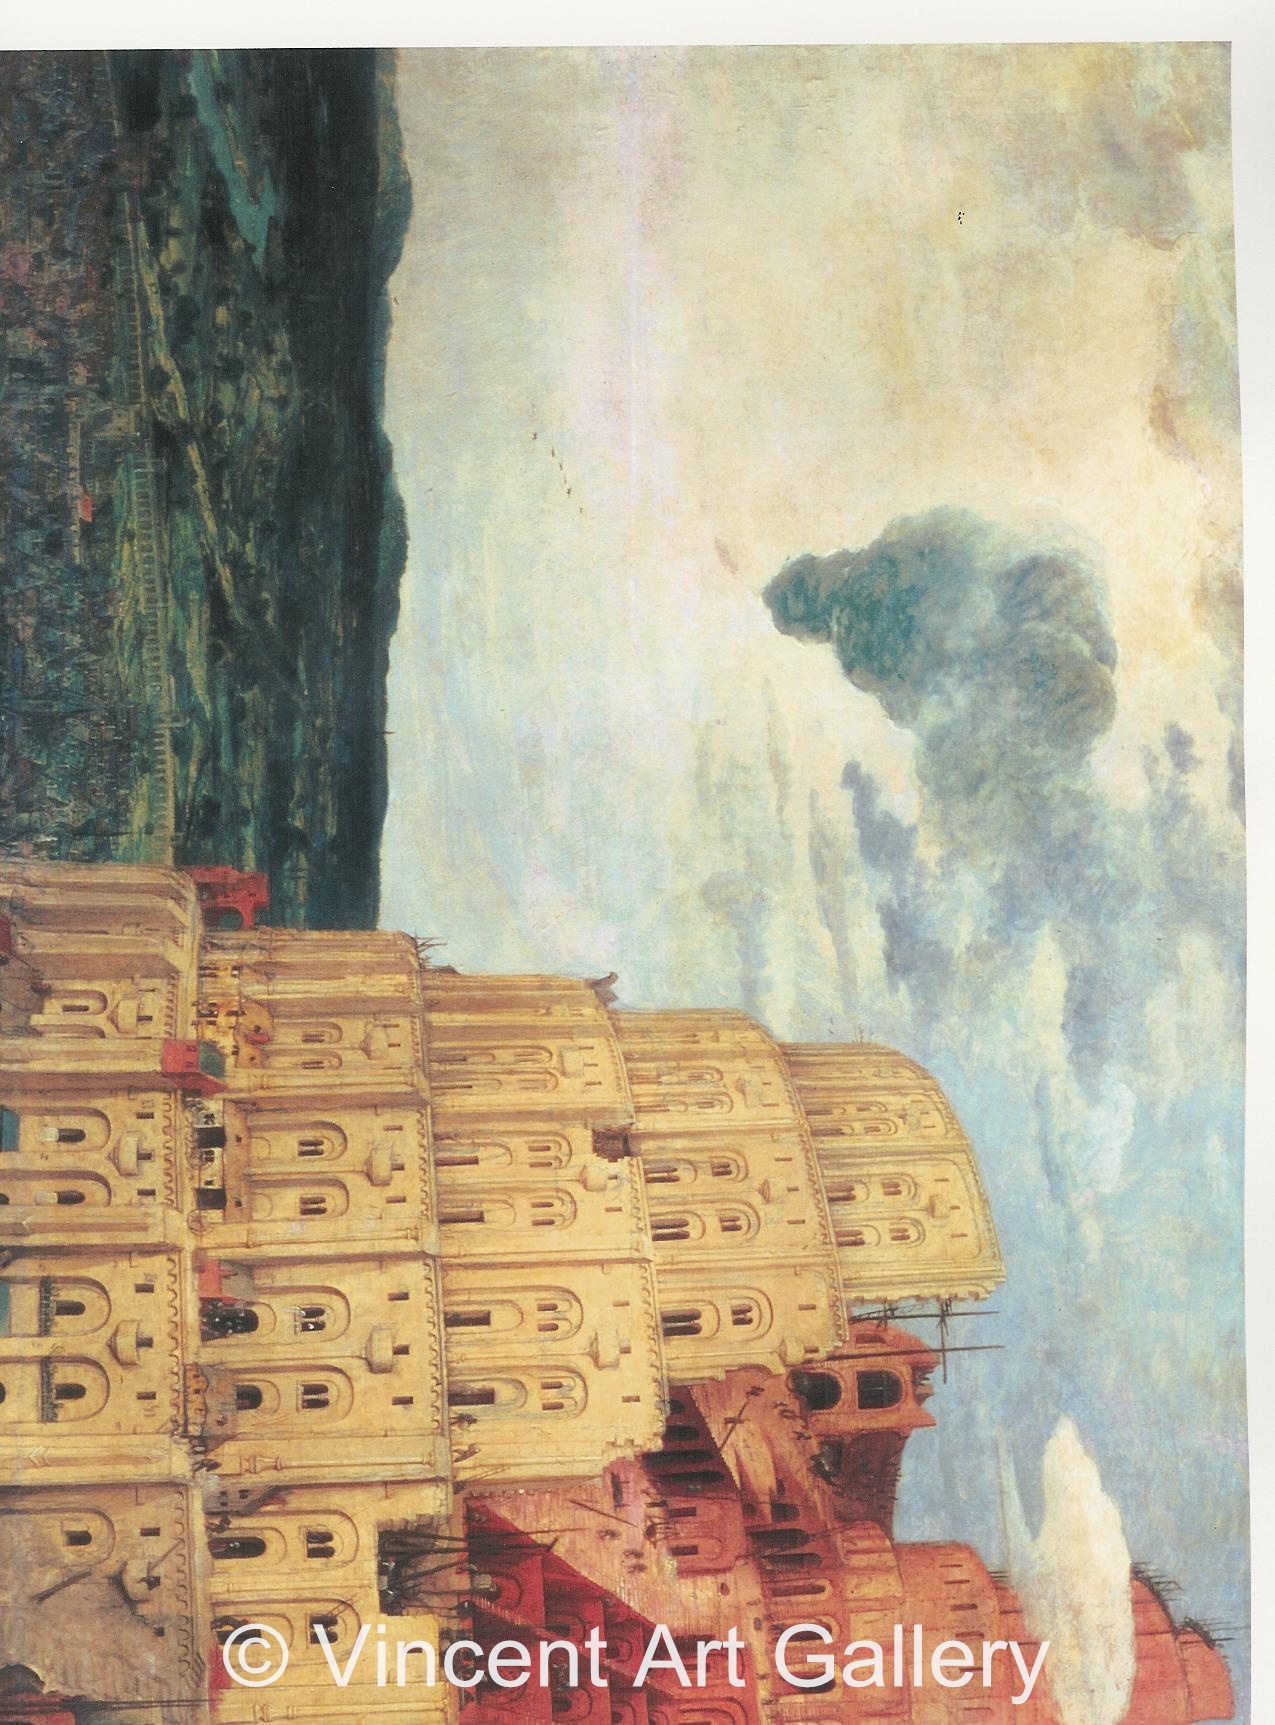 A116, BRUEGEL, The Tower of Babel, detail 2